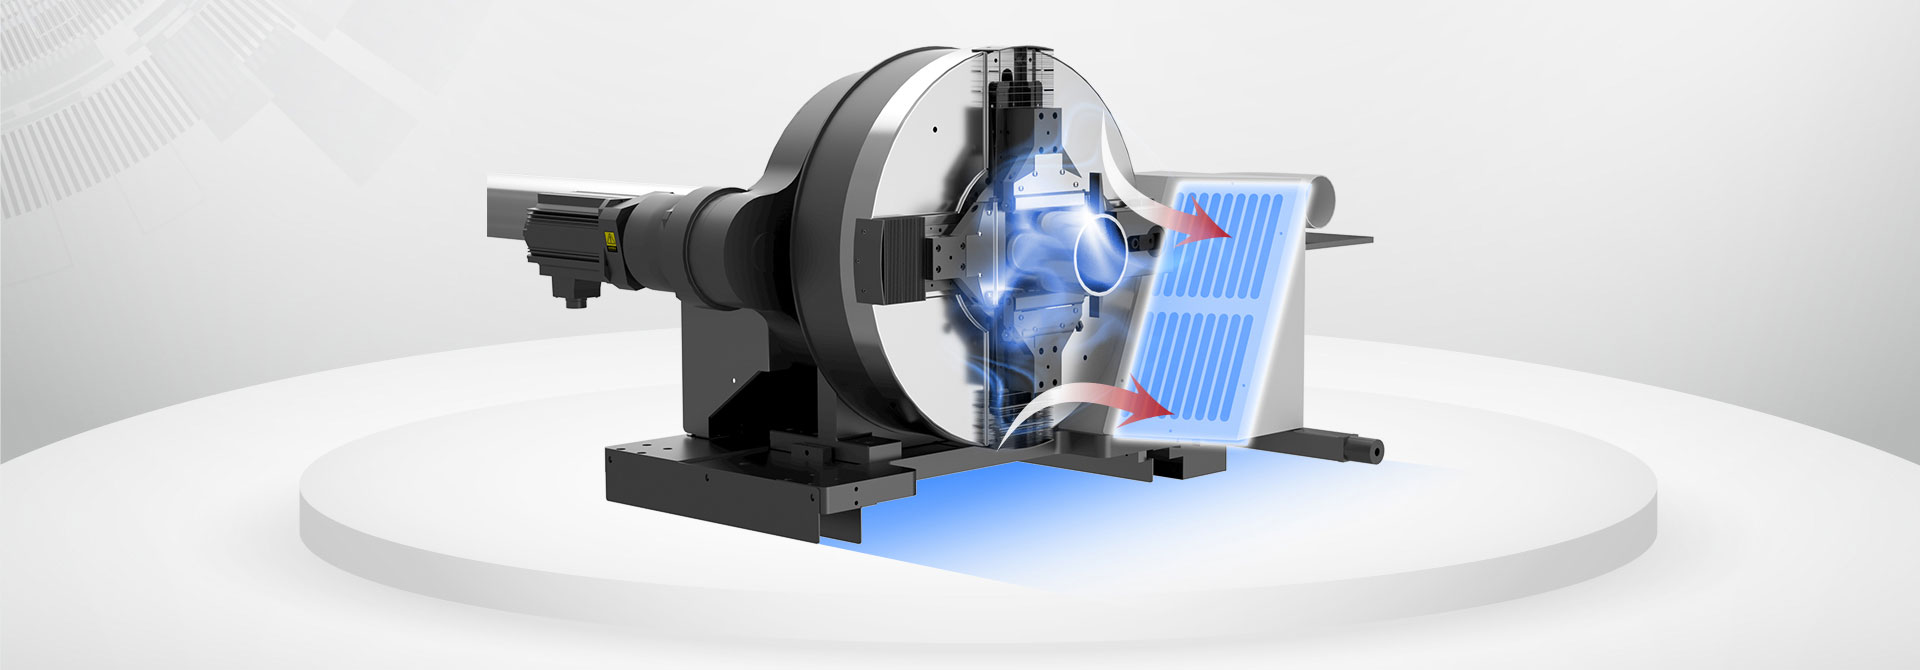 GS-TG Series Tube Laser Cutting Machine